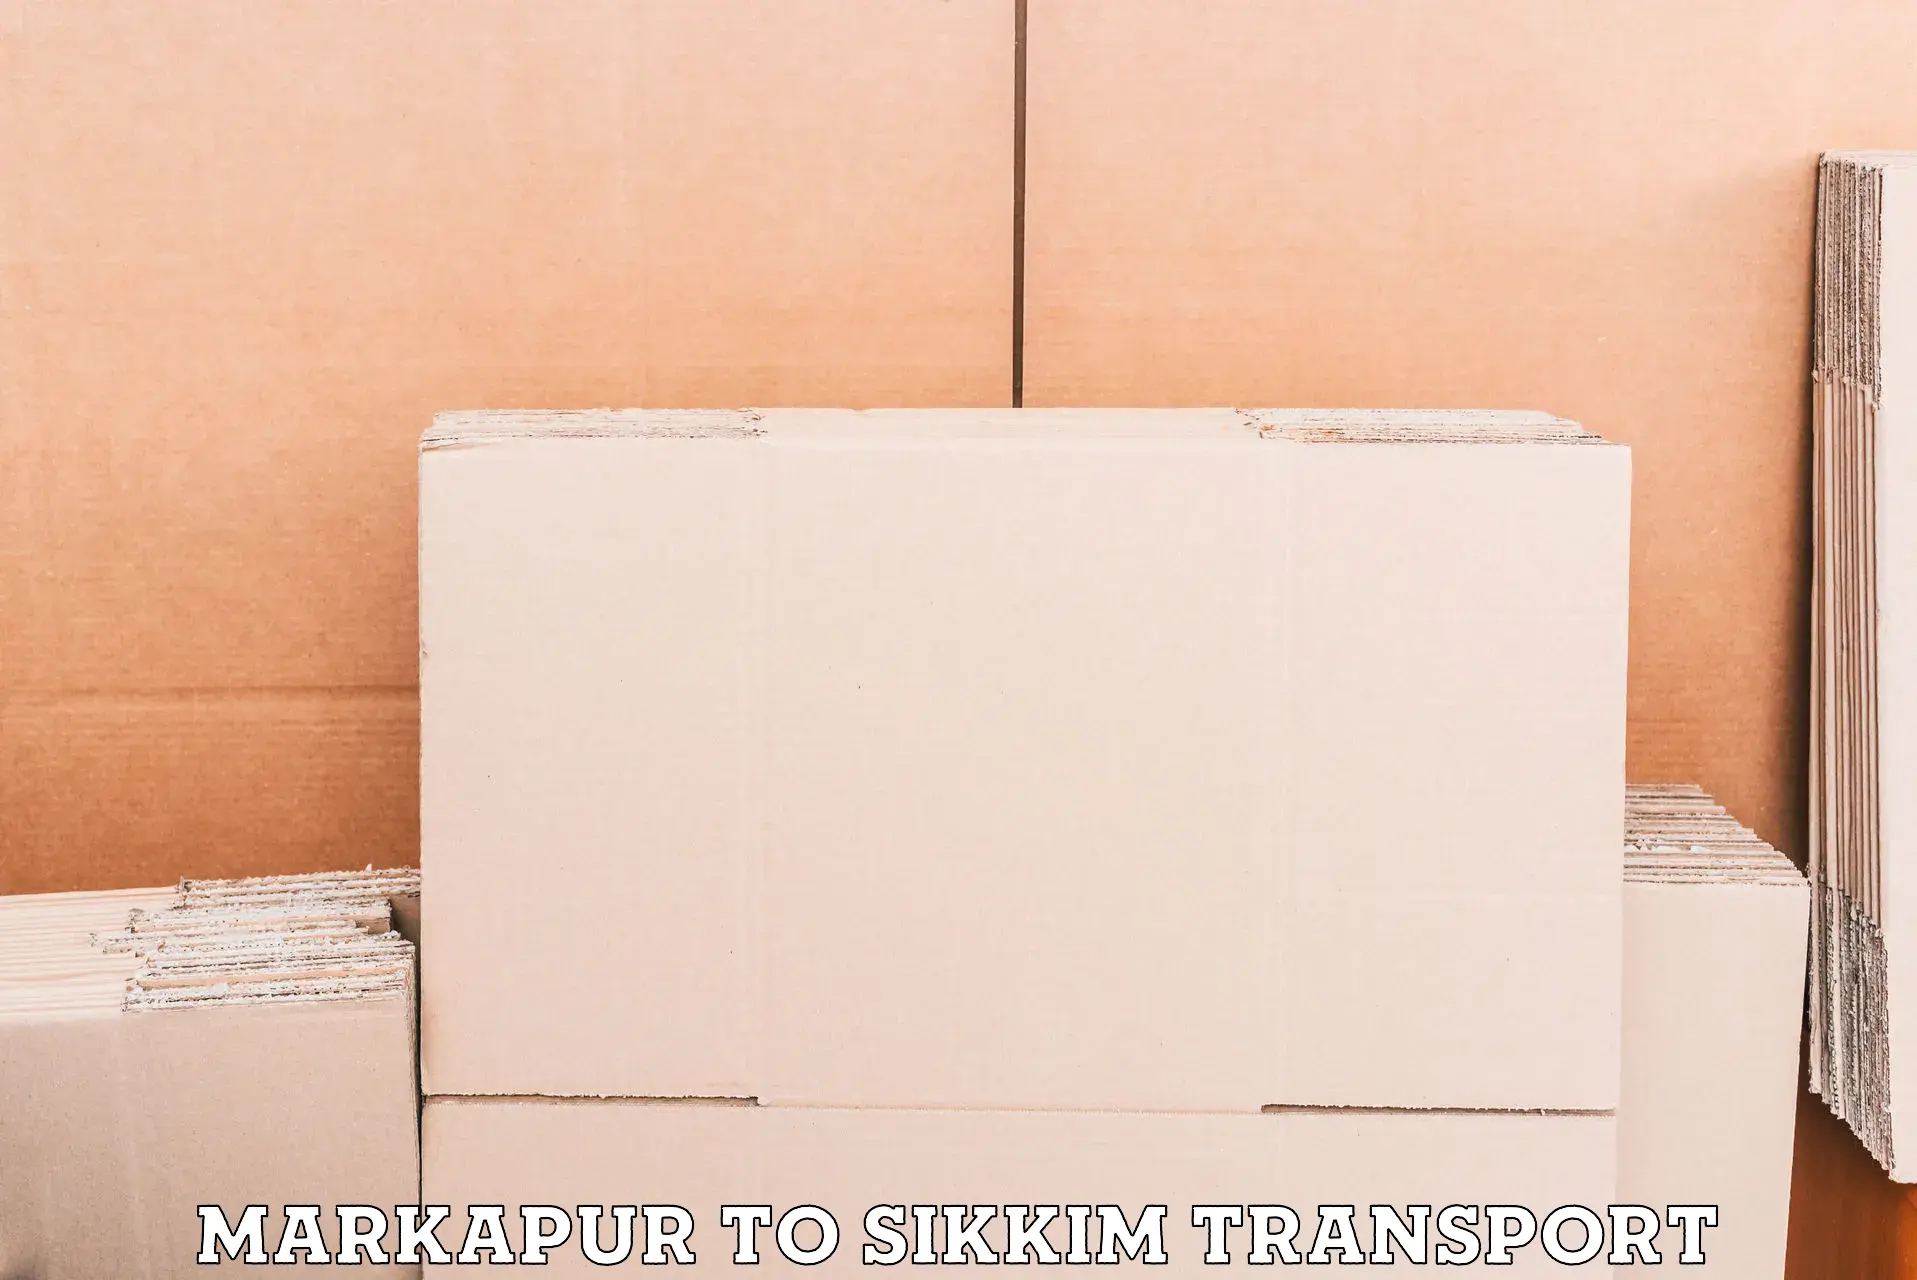 Nearest transport service Markapur to Rangpo